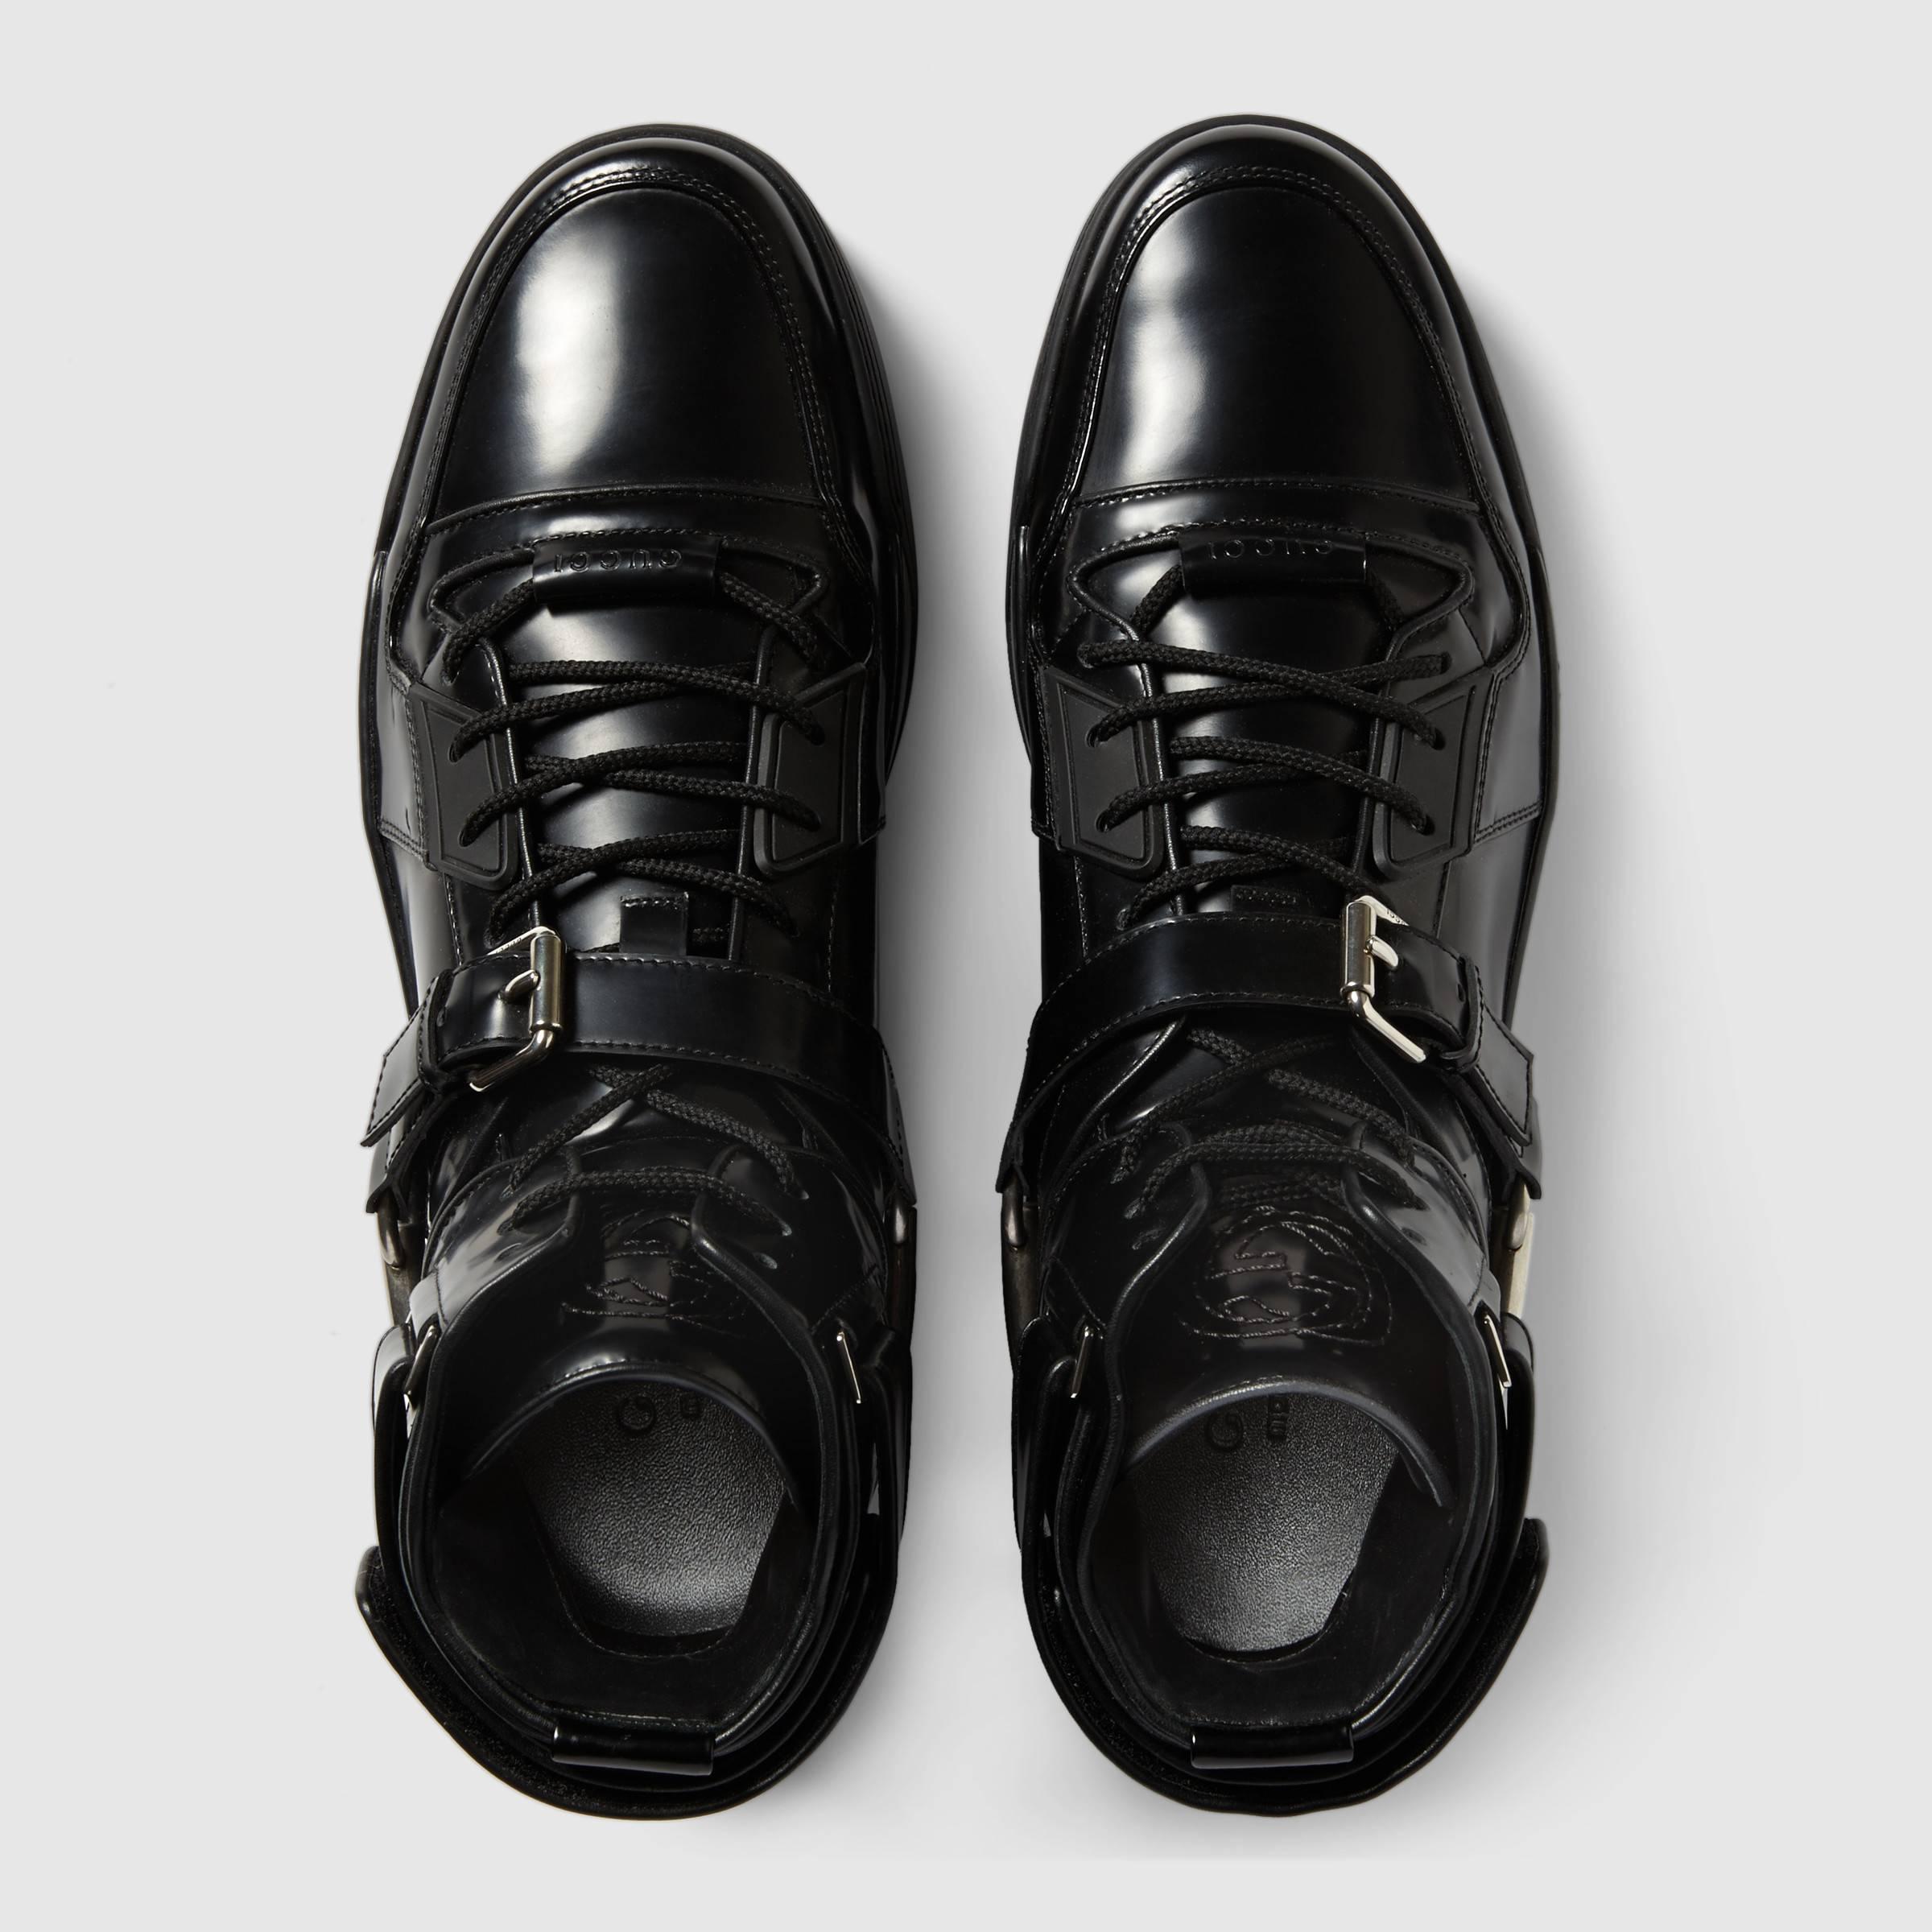 New Gucci Men's Black *Basket Darko* High-Top Sneaker Gucci sizes 8.5  9  9.5 4